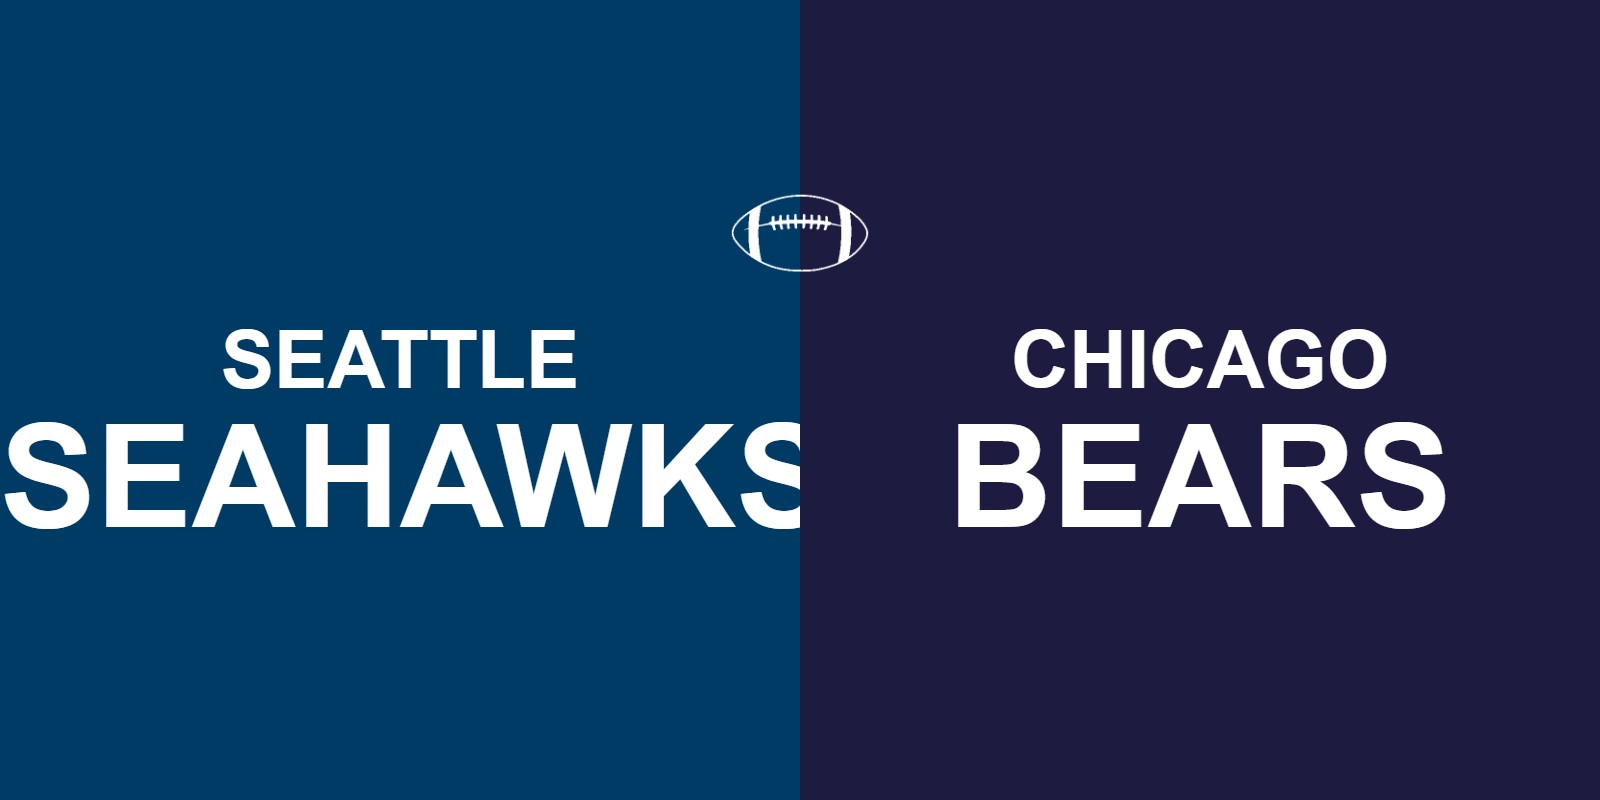 Seahawks vs Bears